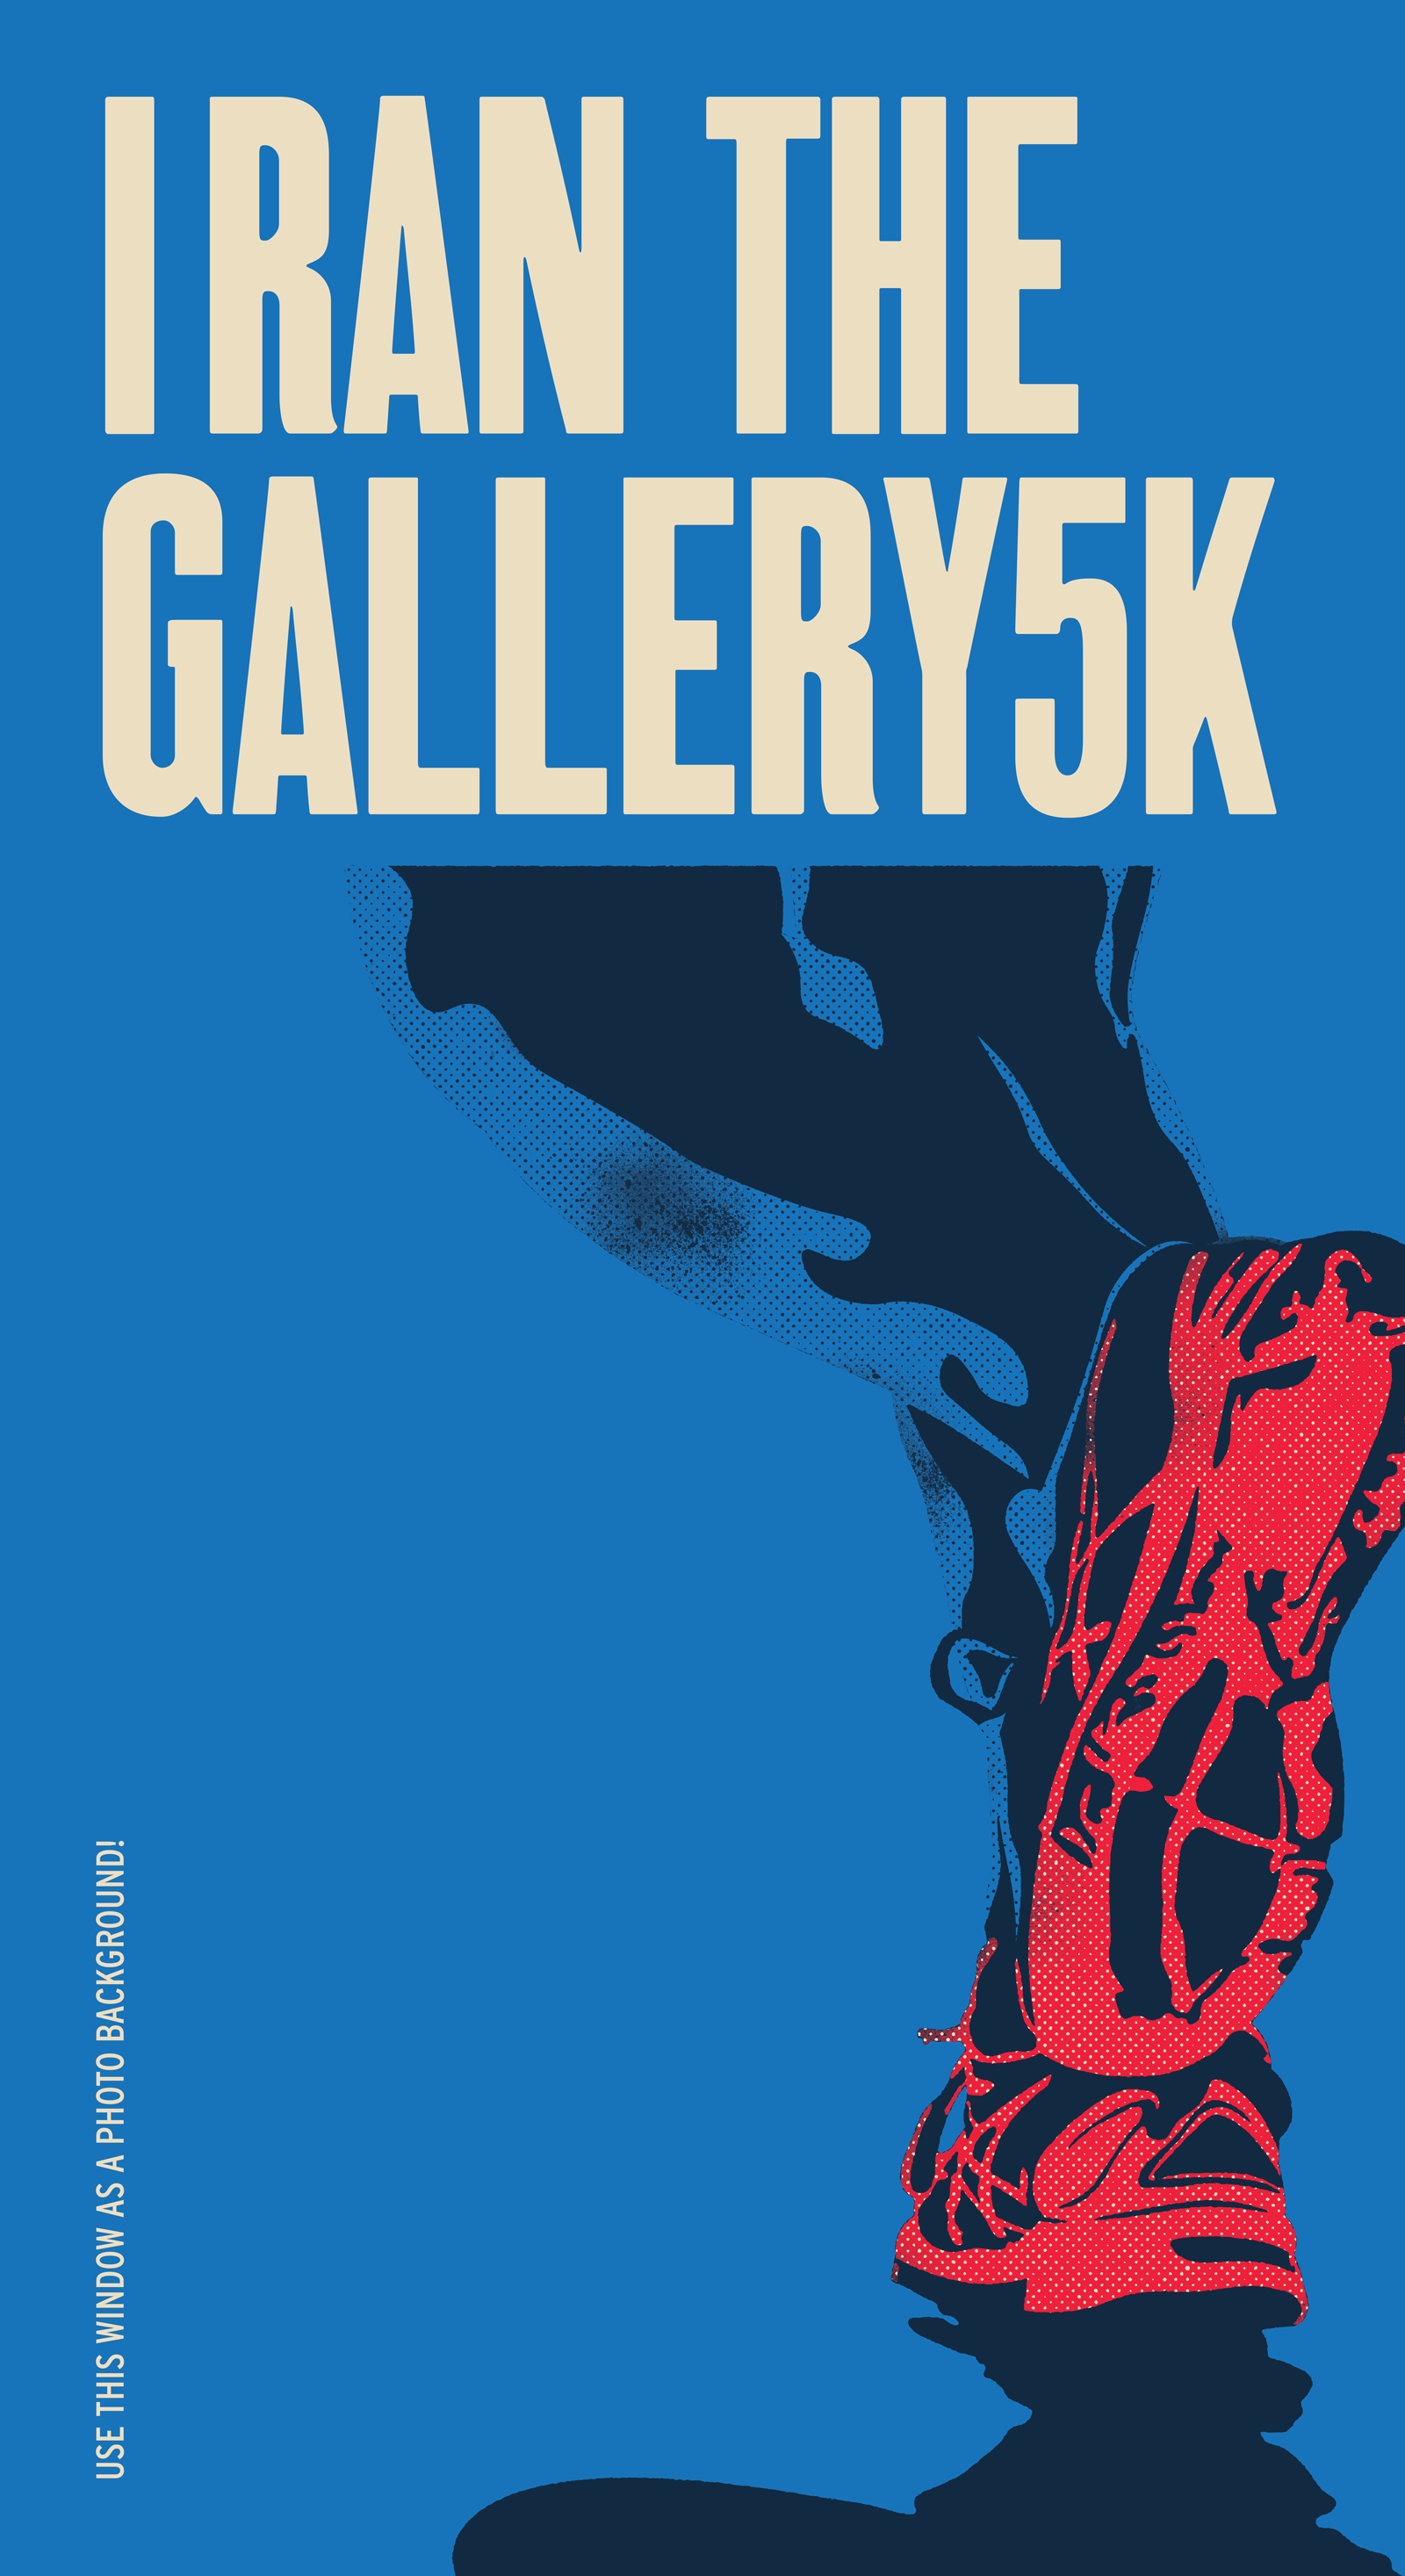 Gallery5k banner